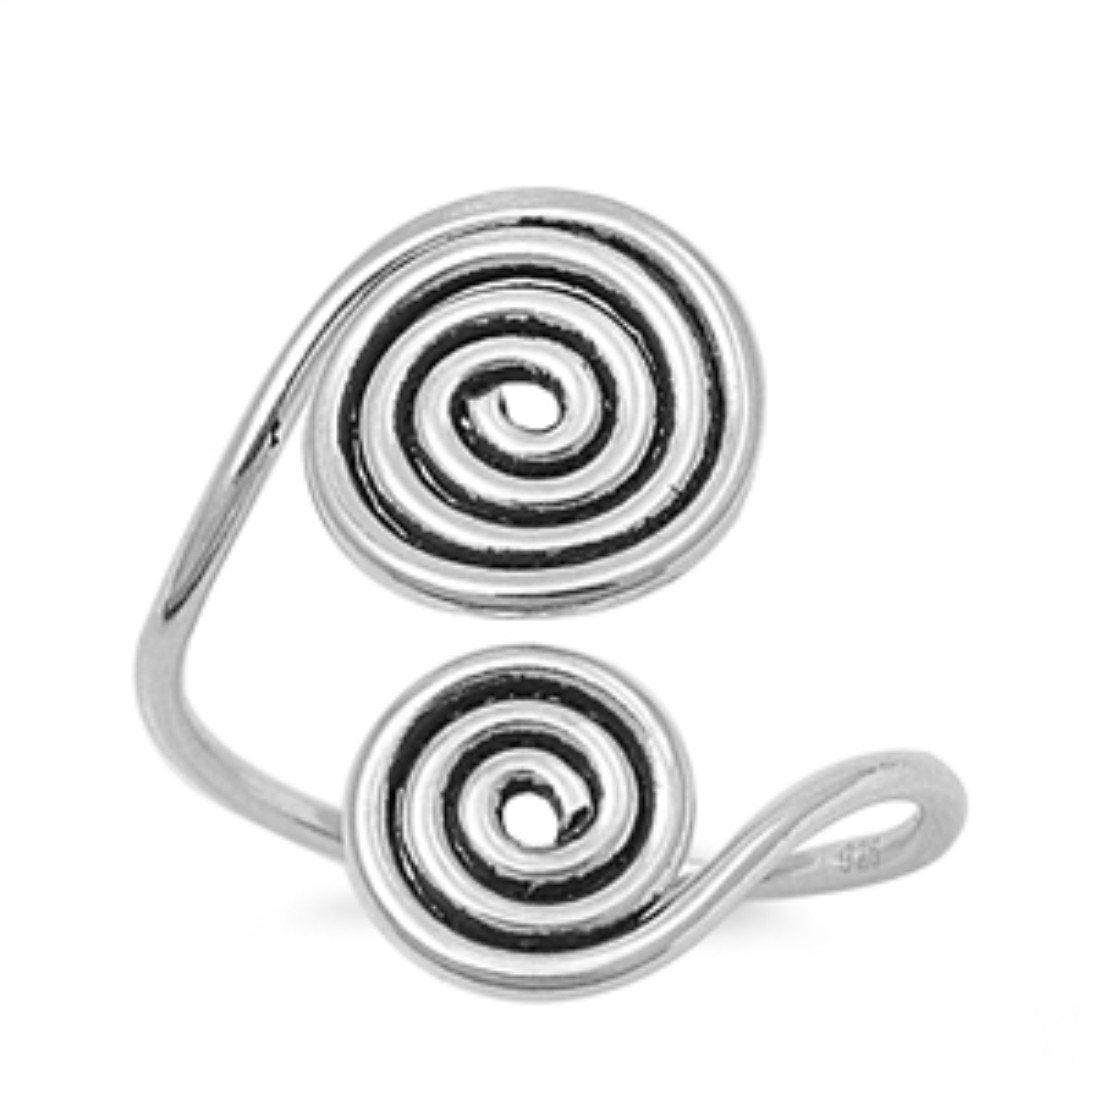 Adjustable Spirals Toe Ring Band 925 Sterling Silver (15mm)